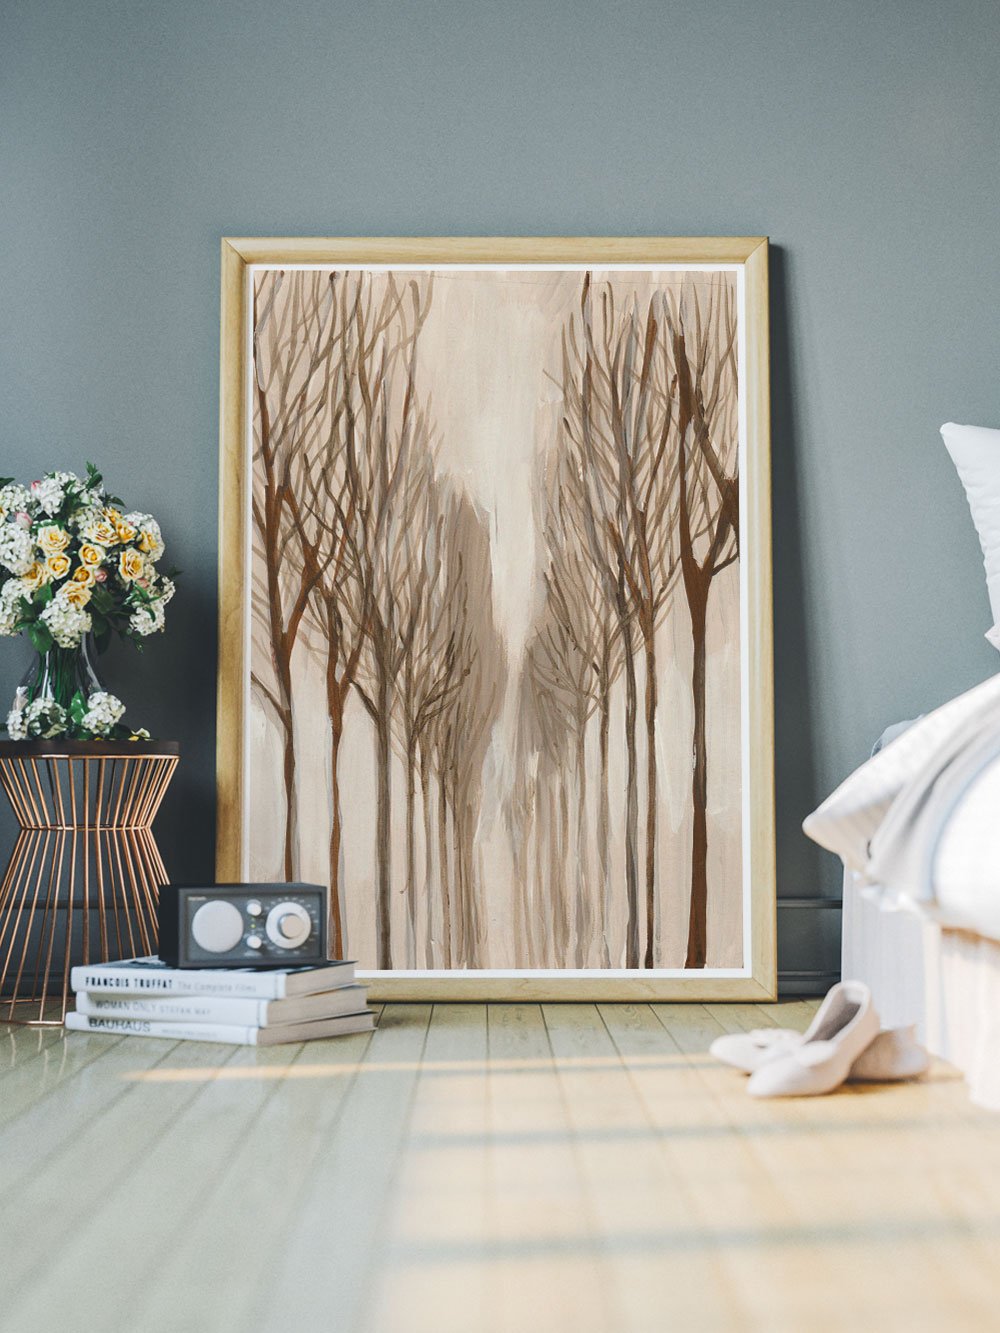 Benhampton Road Woodland Tree Print in a modern bedroom